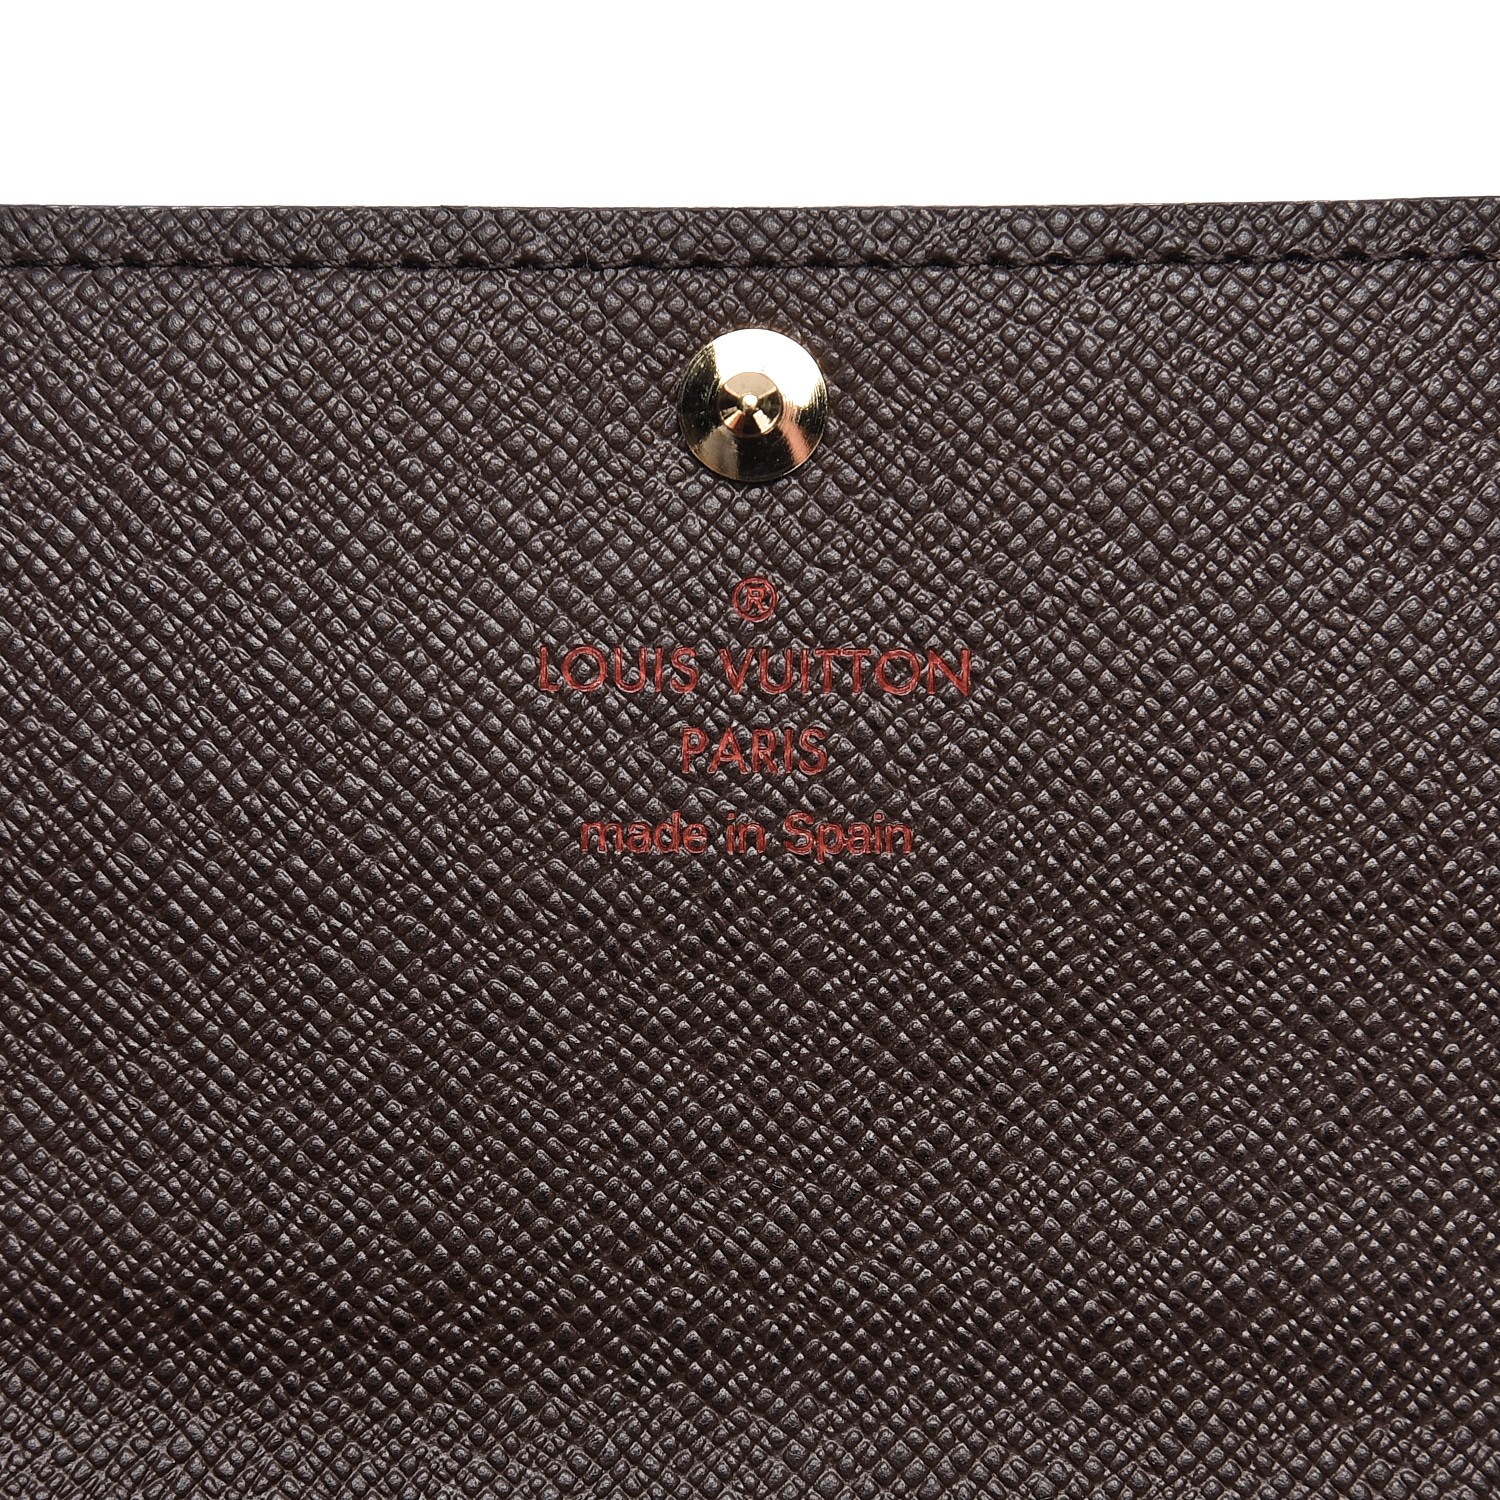 Louis Vuitton Damier Azur Anais Wallet N63241 Women's Damier Azur